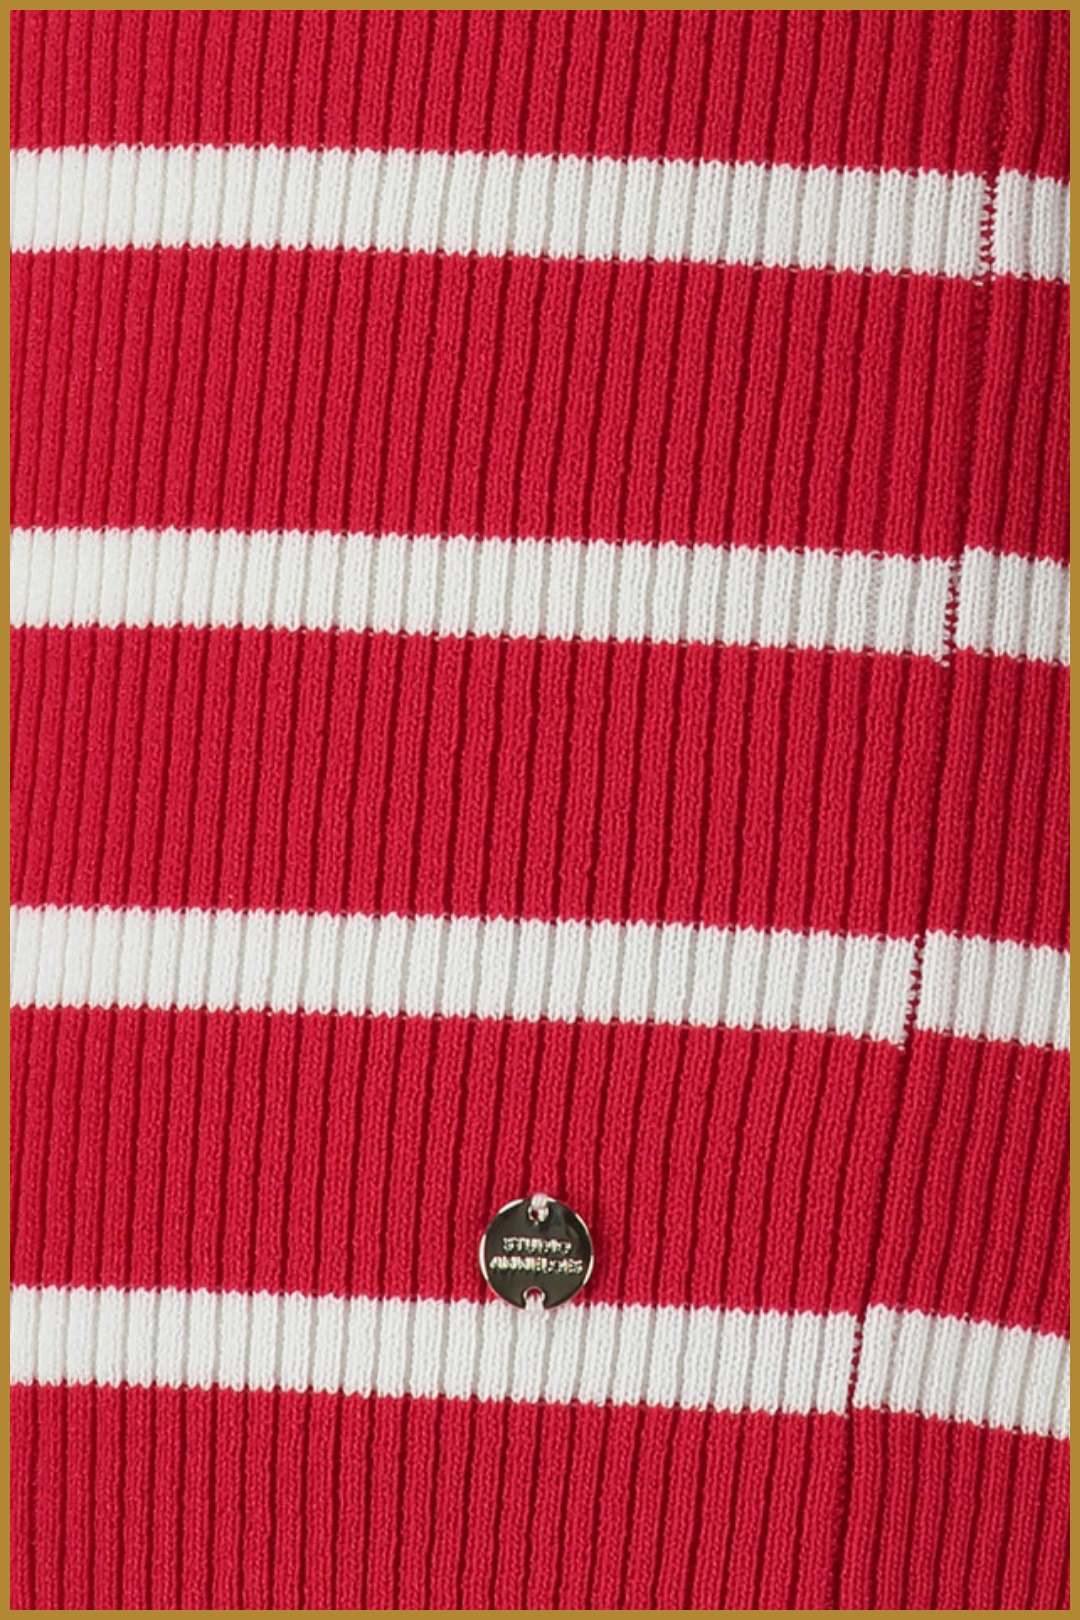 STUDIO ANNELOES - Diede stripe bootneck pullover red white - STU230043